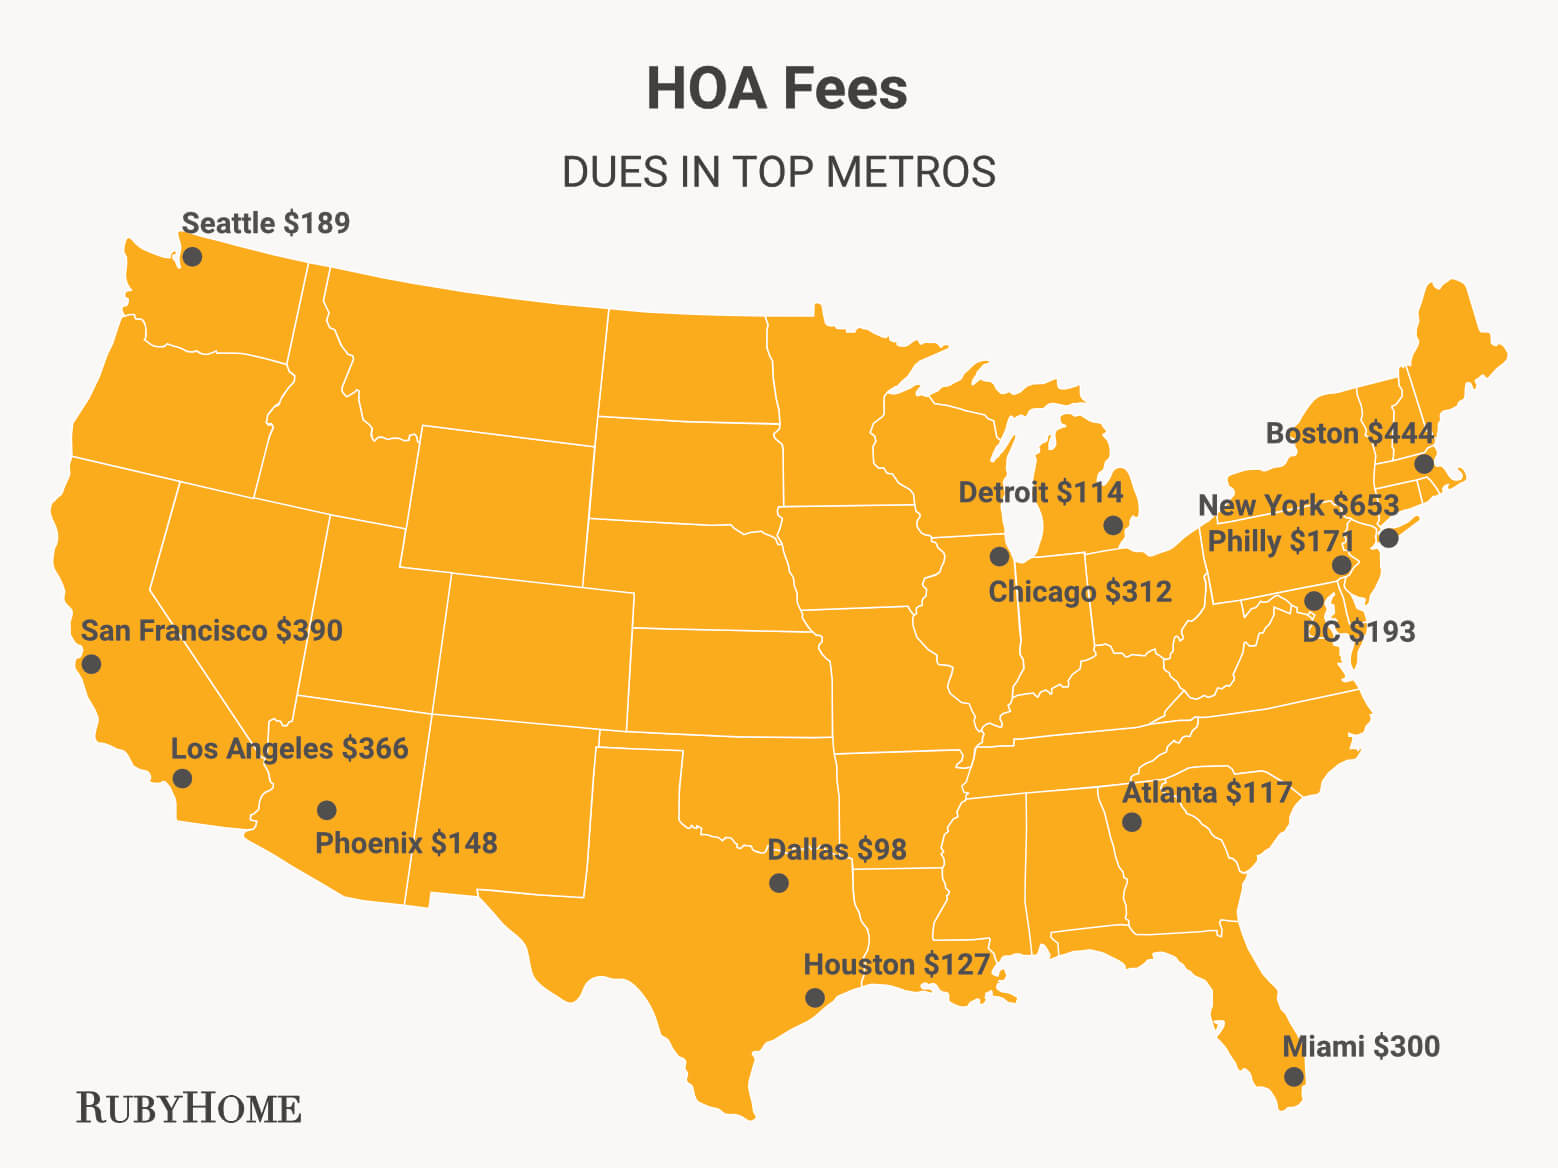 HOA Fees by City